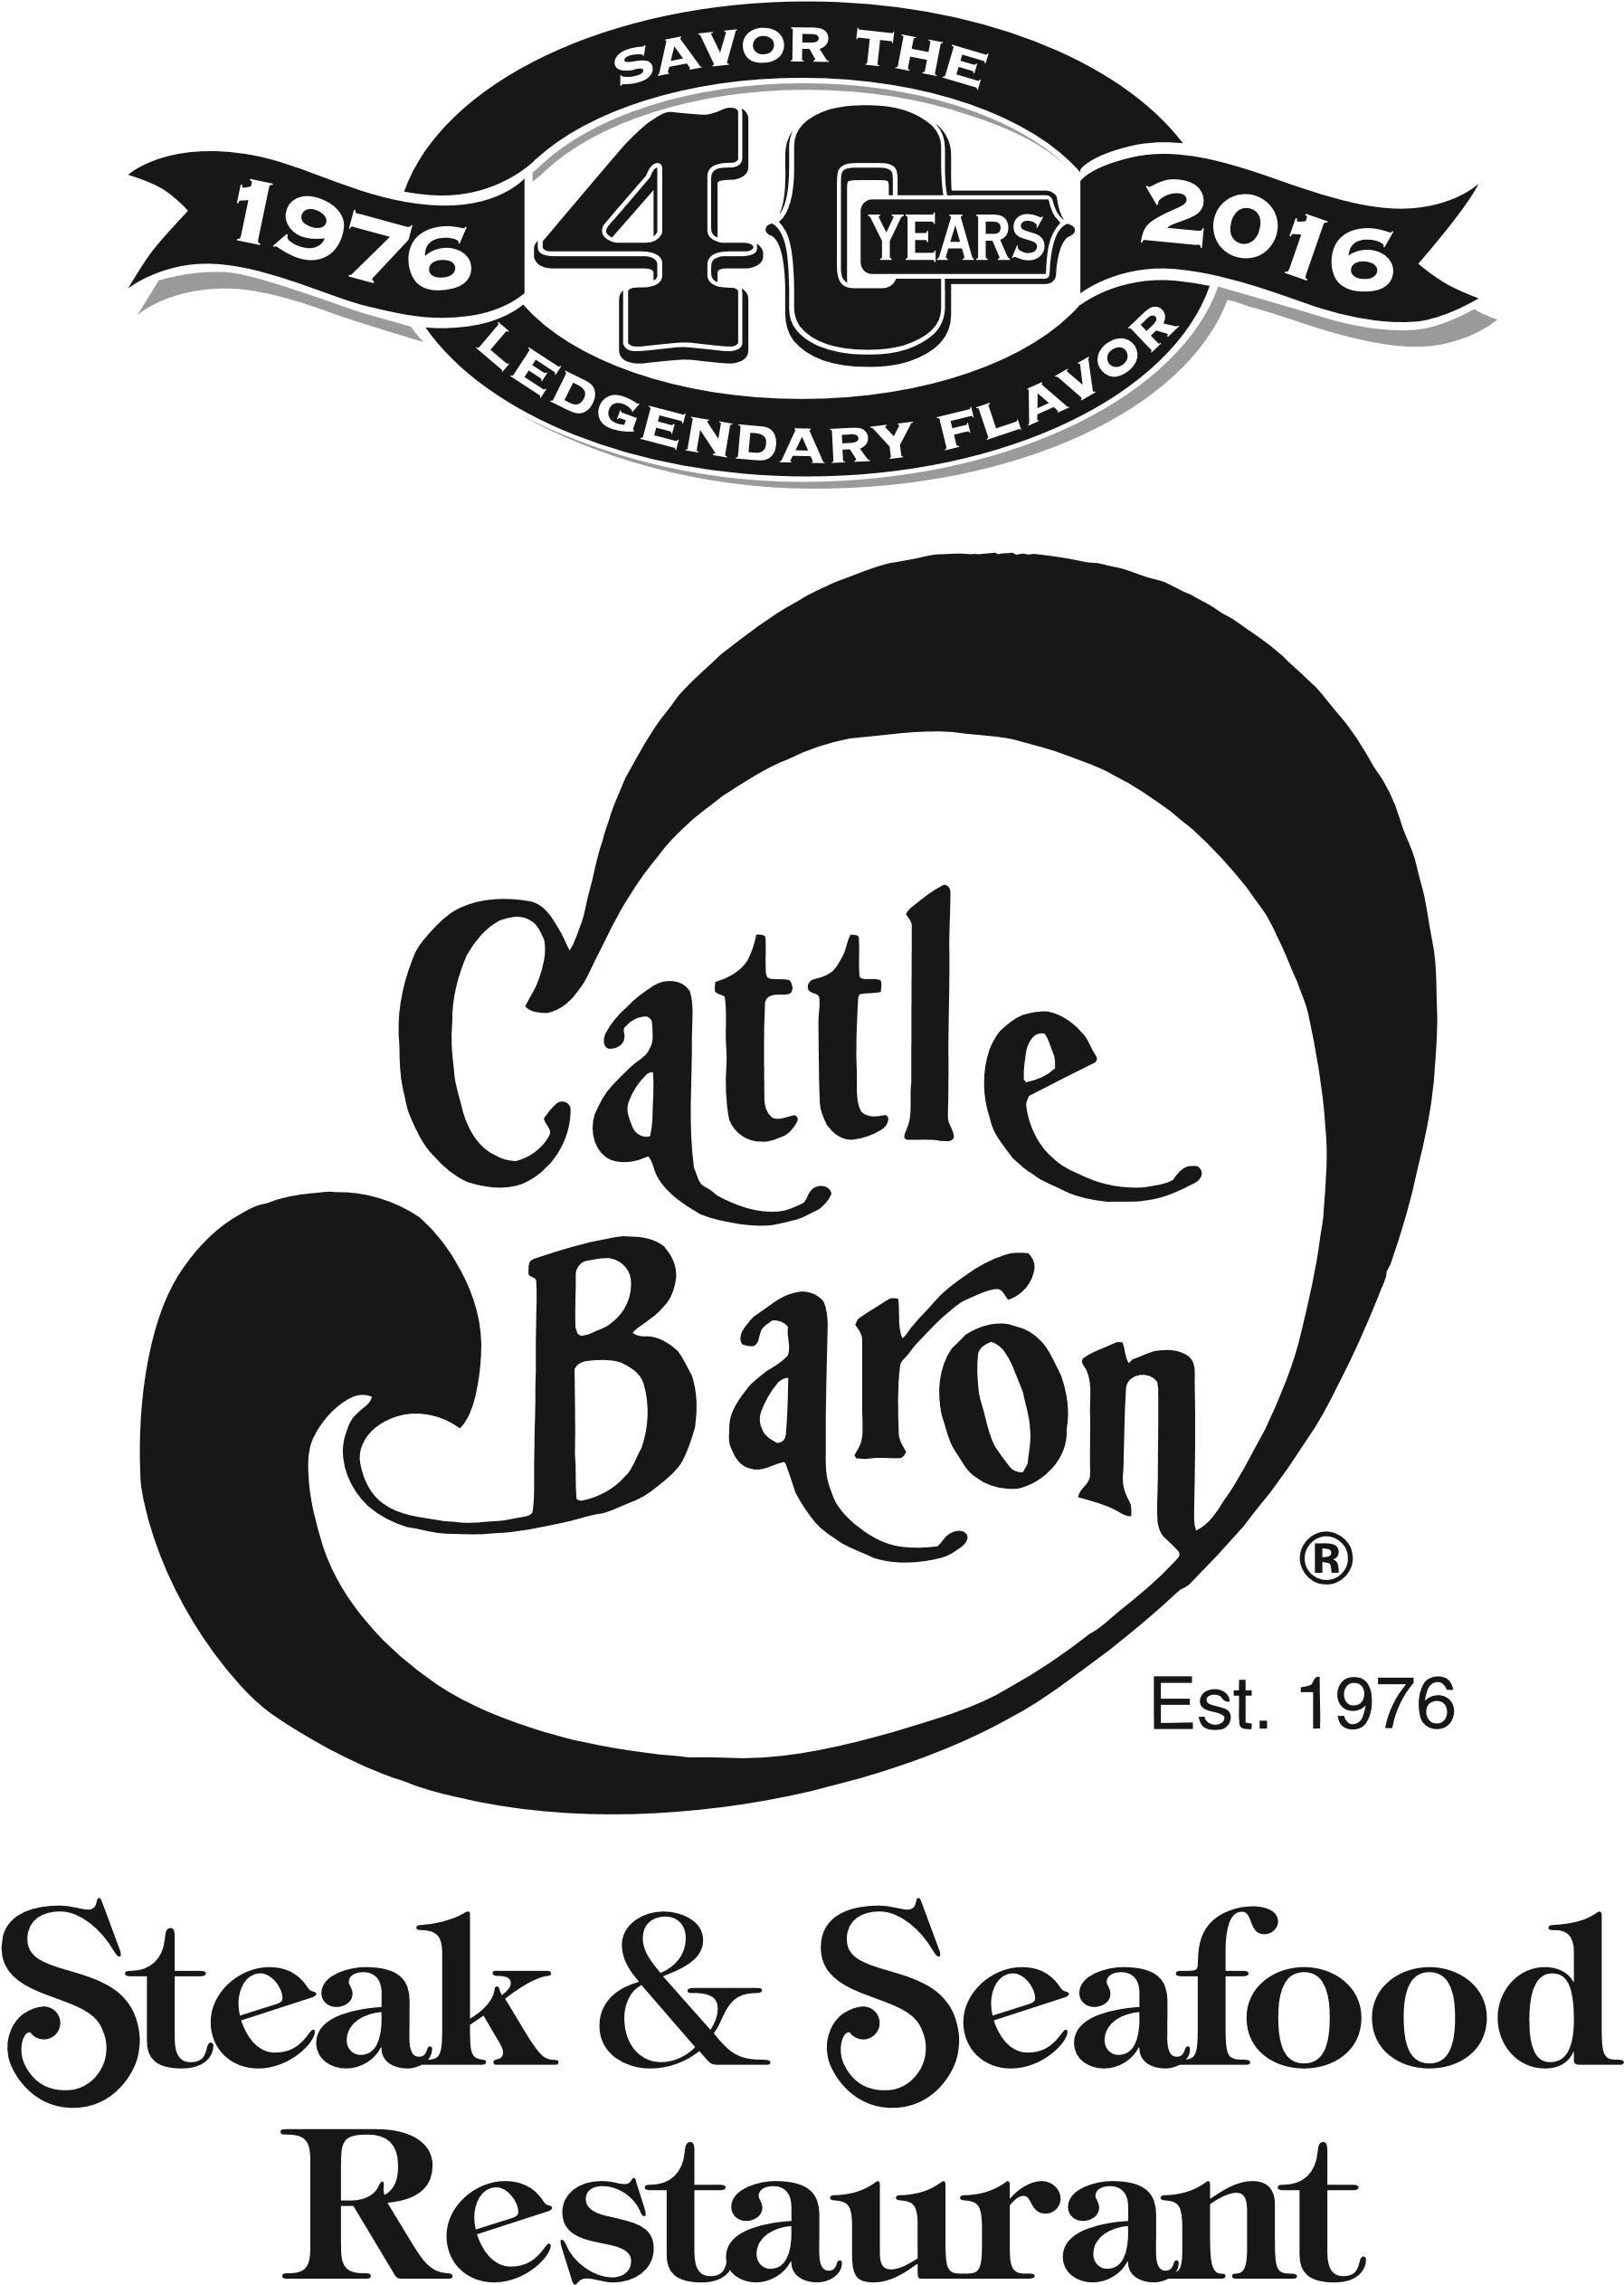 Cattle Baron - Las Cruces logo